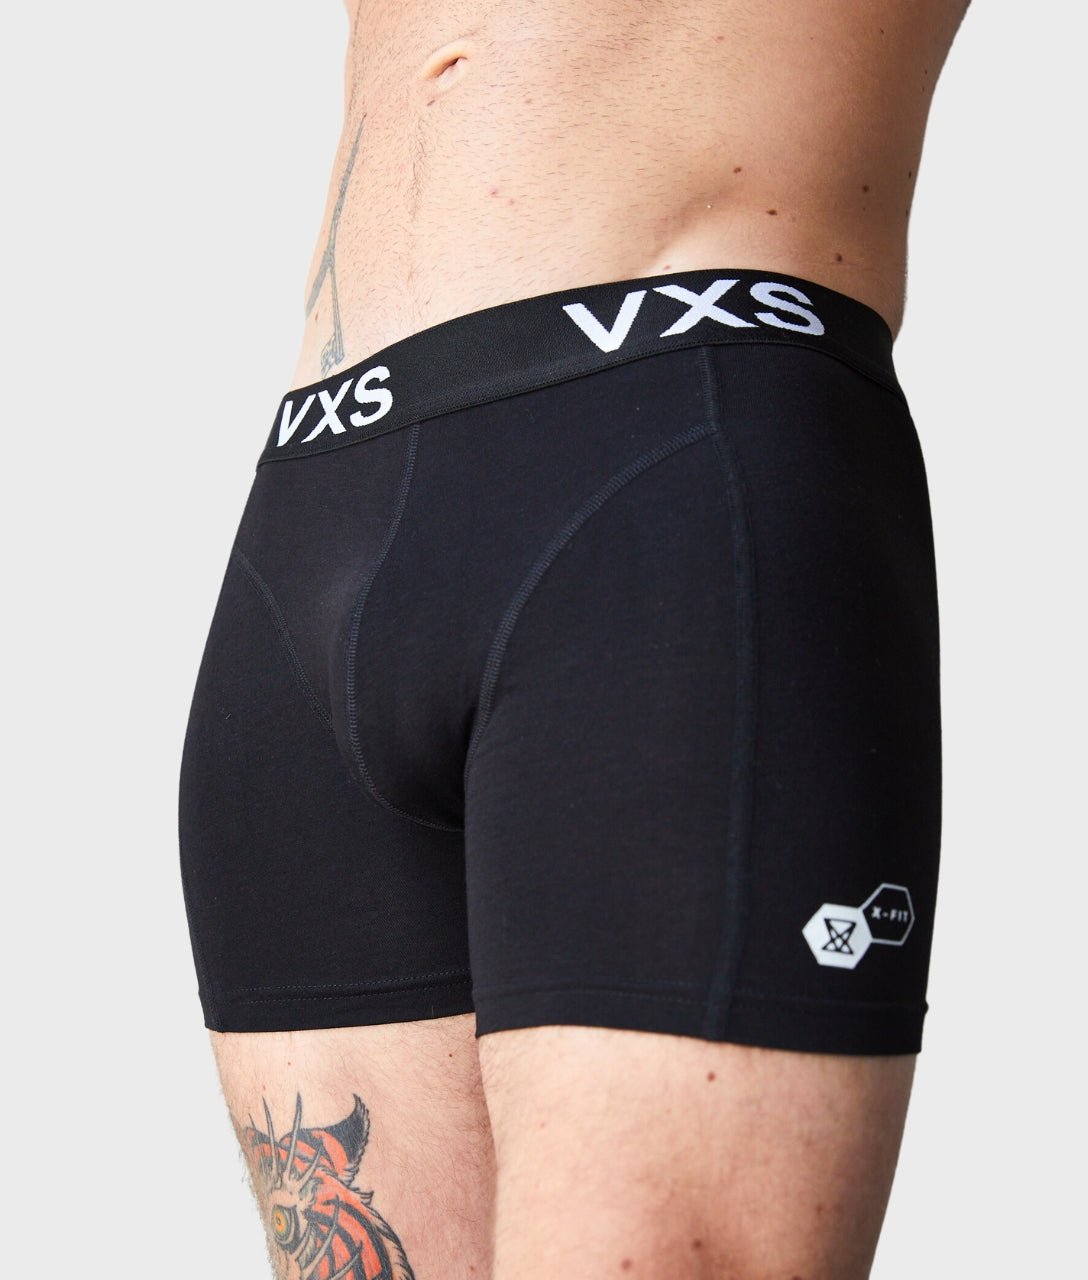 Bamboo Boxer Shorts 2 Pack [Black/Black] - VXS GYM WEAR